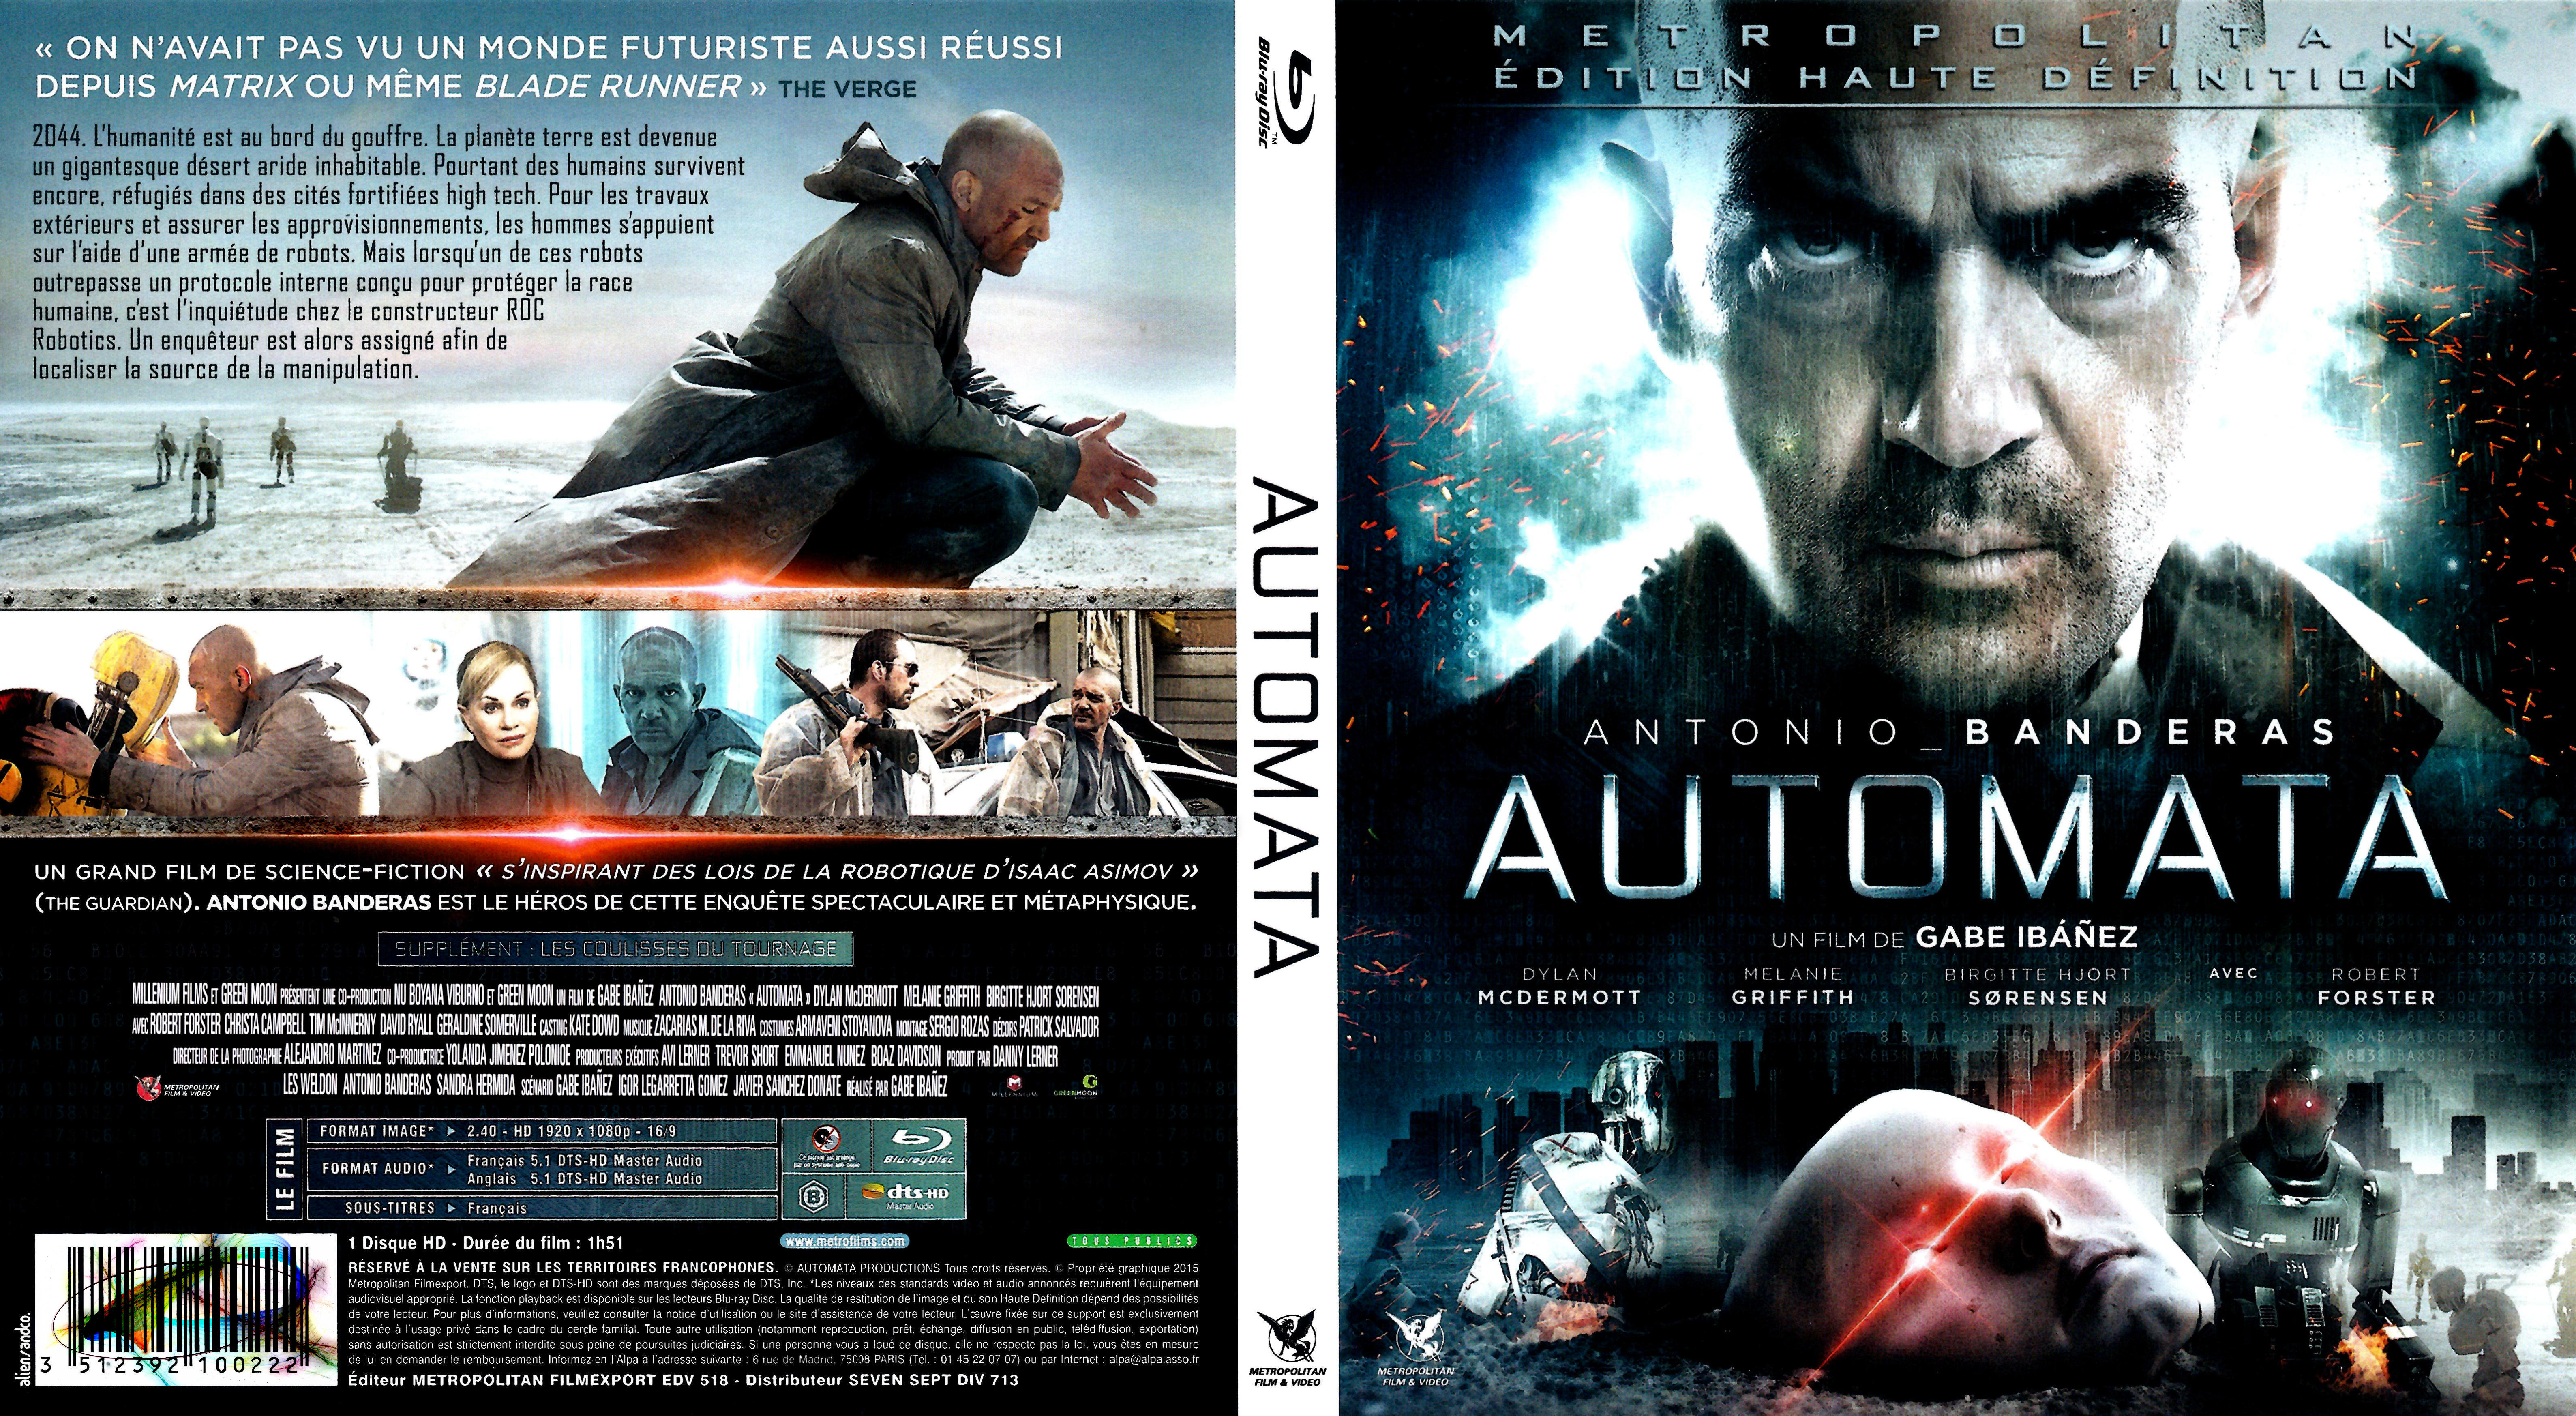 Jaquette DVD Automata (BLU-RAY)